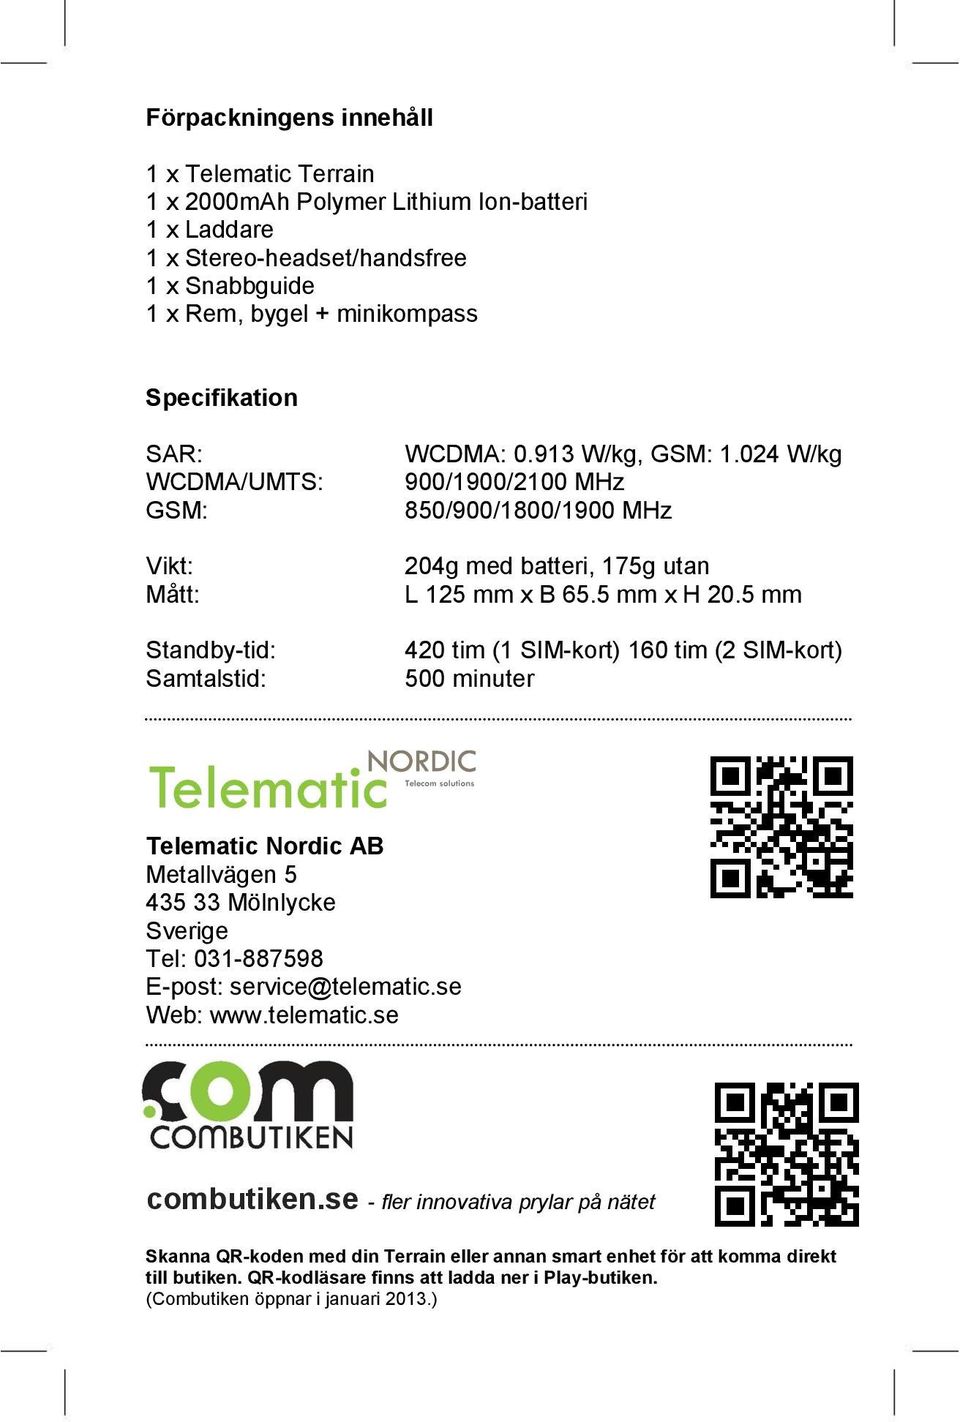 5 mm 420 tim (1 SIM-kort) 160 tim (2 SIM-kort) 500 minuter Telematic Nordic AB Metallvägen 5 435 33 Mölnlycke Sverige Tel: 031-887598 E-post: service@telematic.se Web: www.telematic.se combutiken.